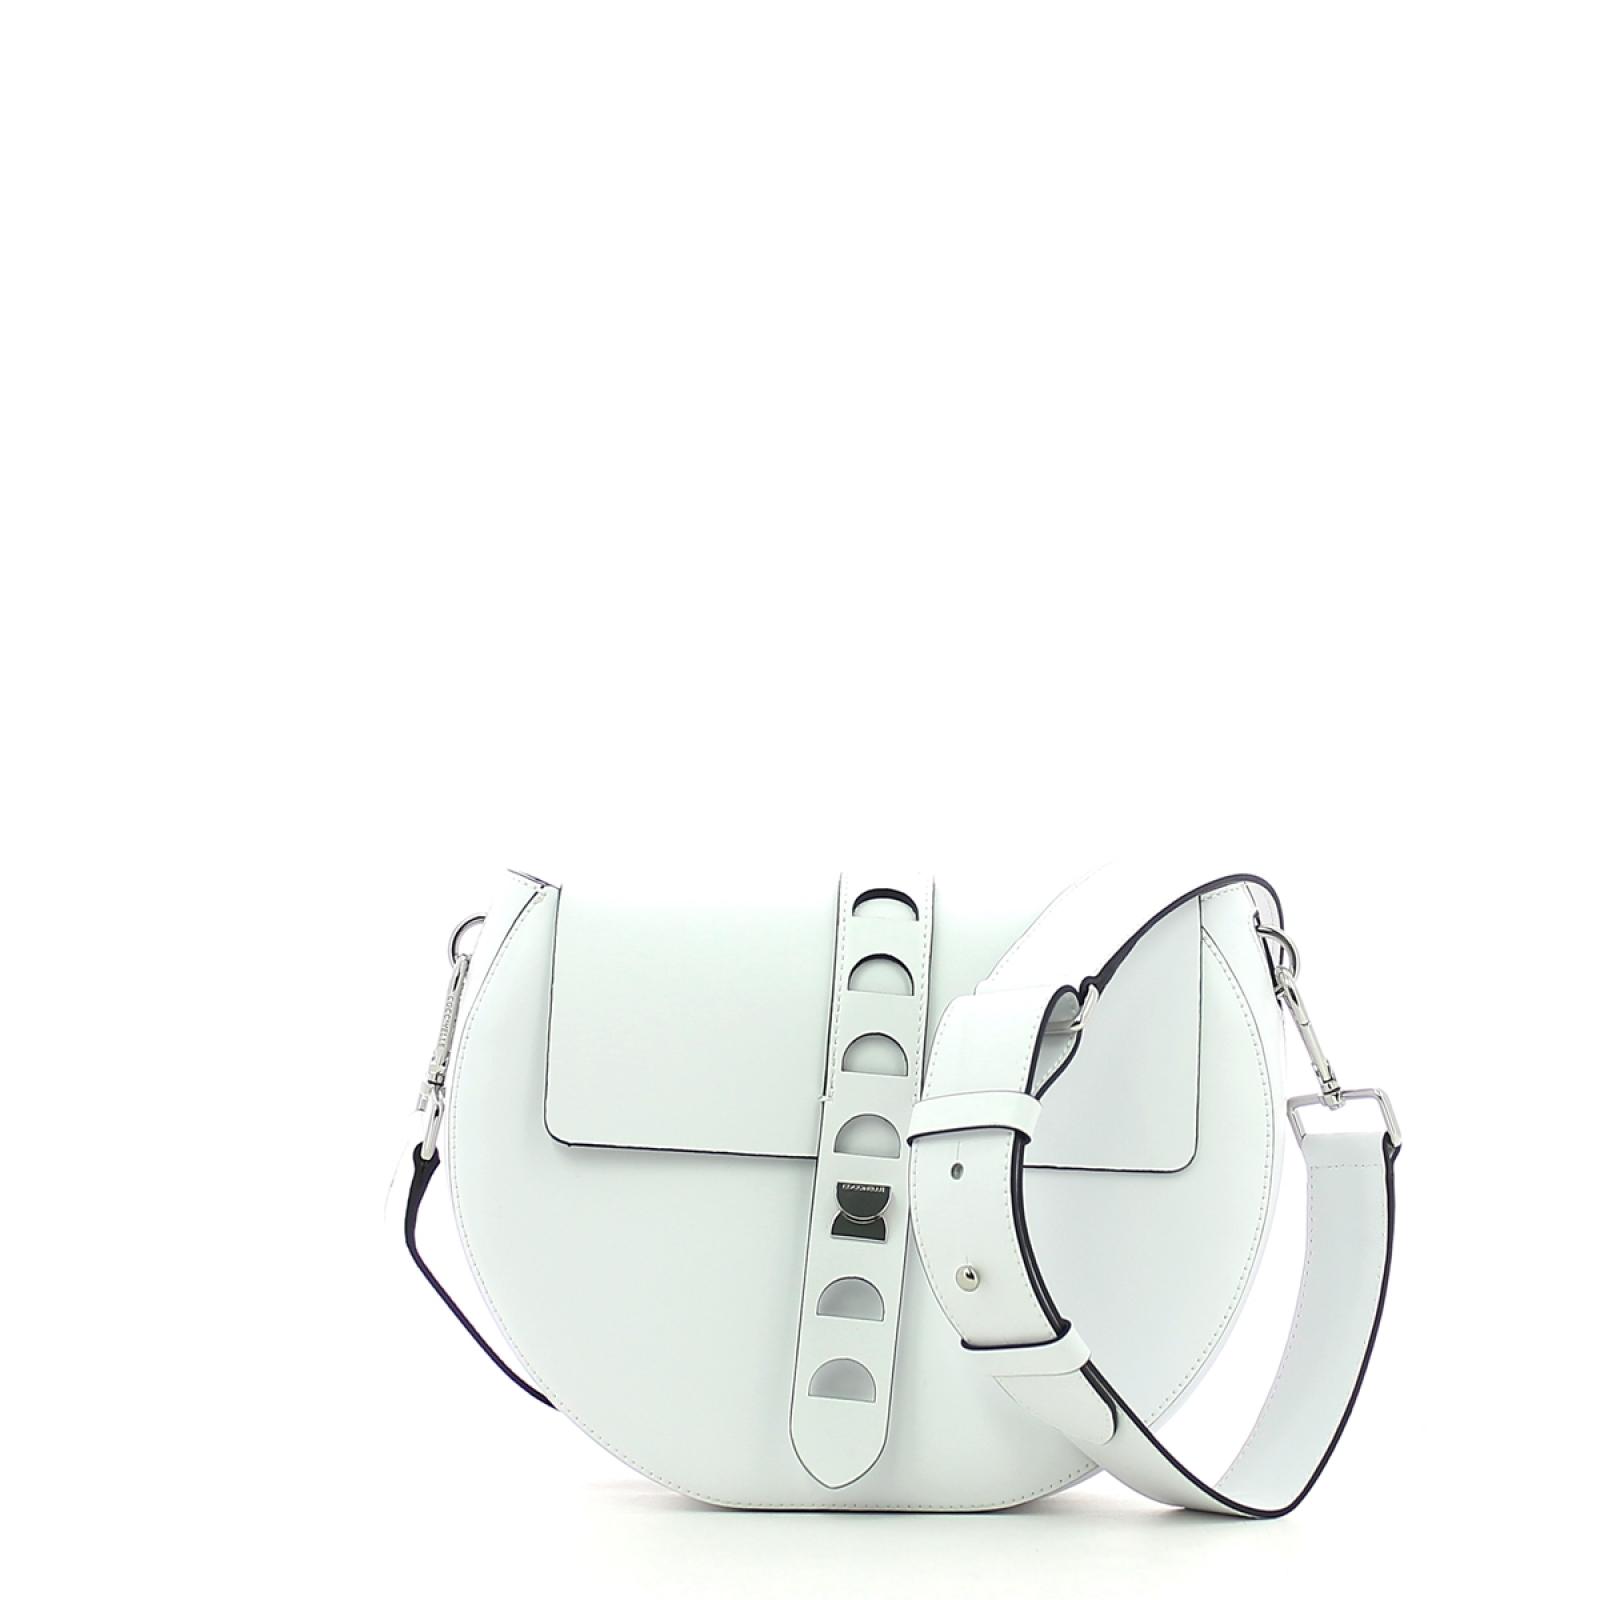 Carousel calfskin bag with single shoulder strap-BLANCHE-UN